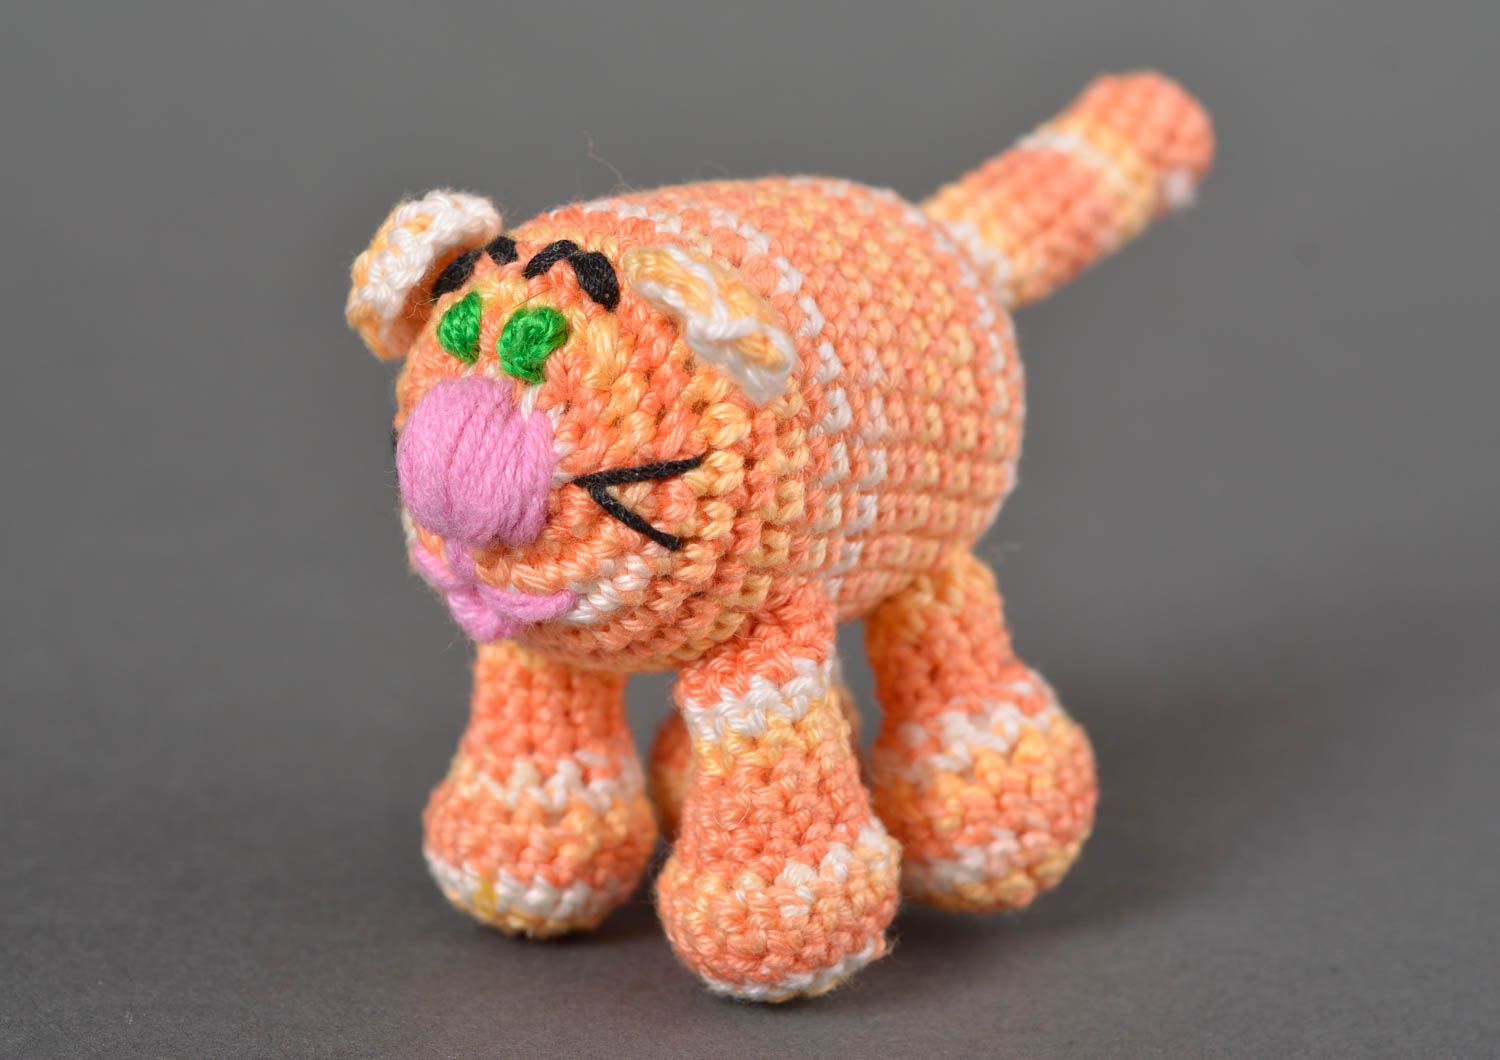 Handmade rattle toy crocheted soft toy for newborn baby nursery decor photo 1